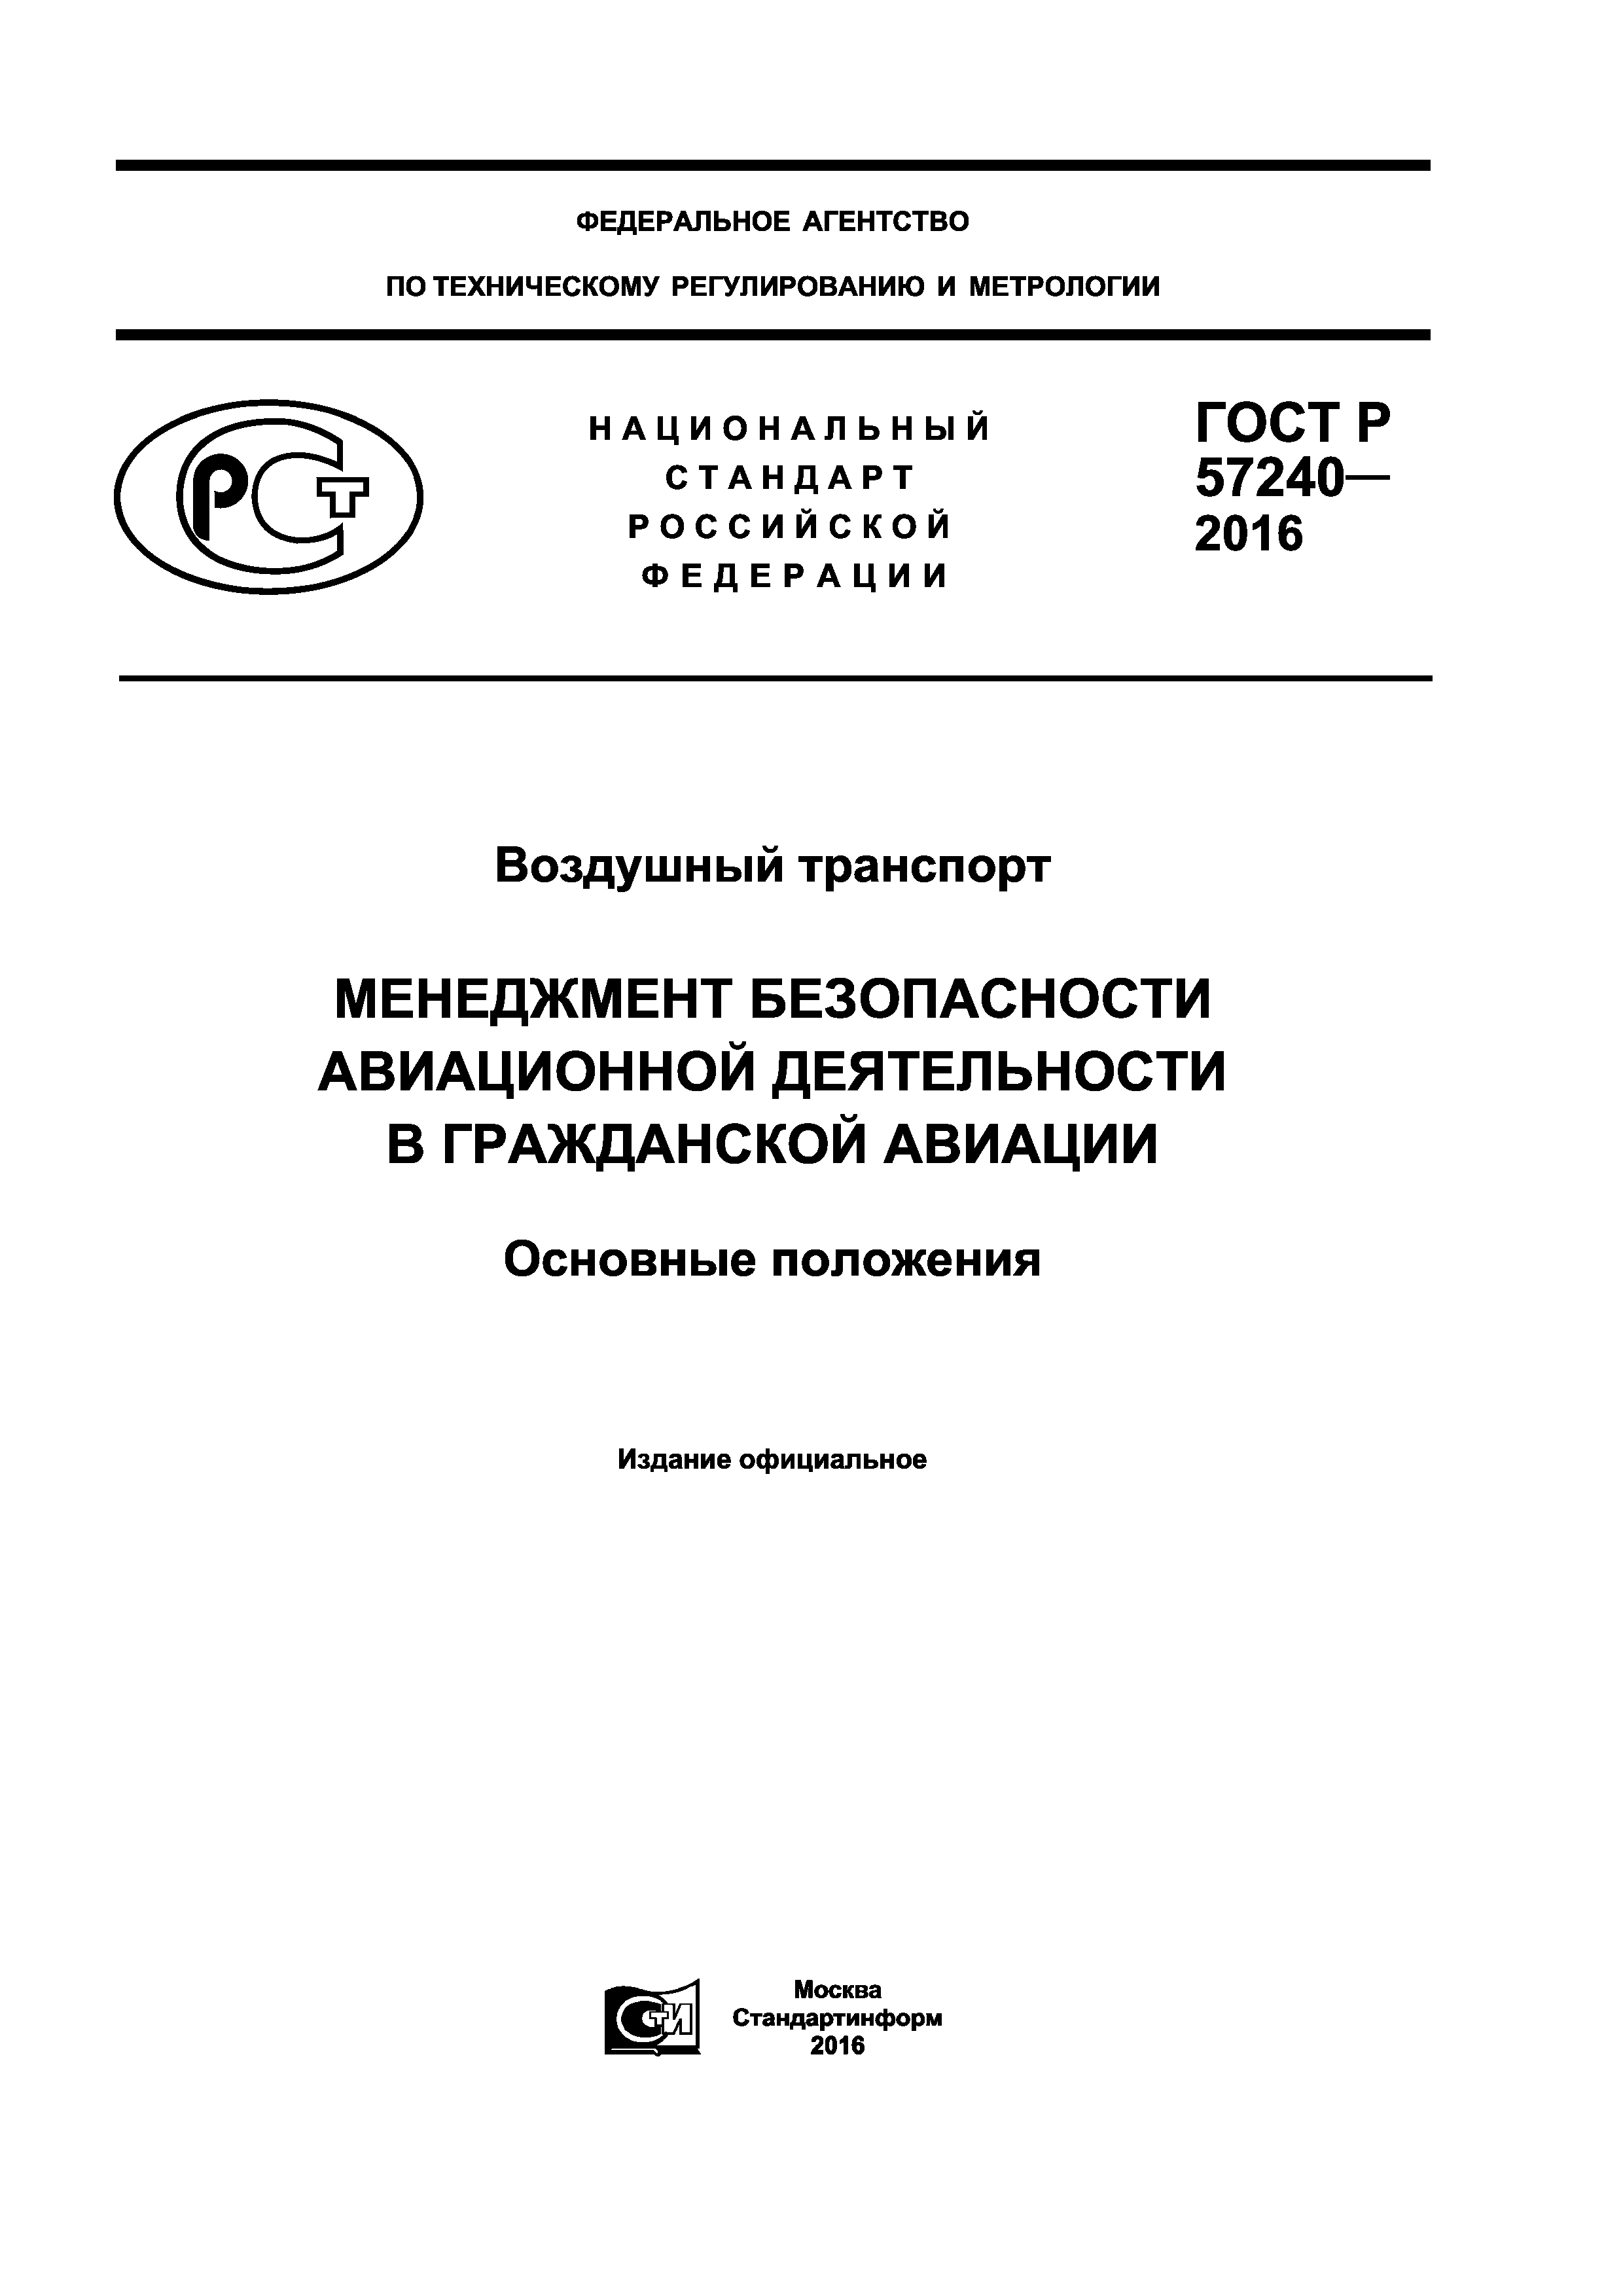 ГОСТ Р 57240-2016